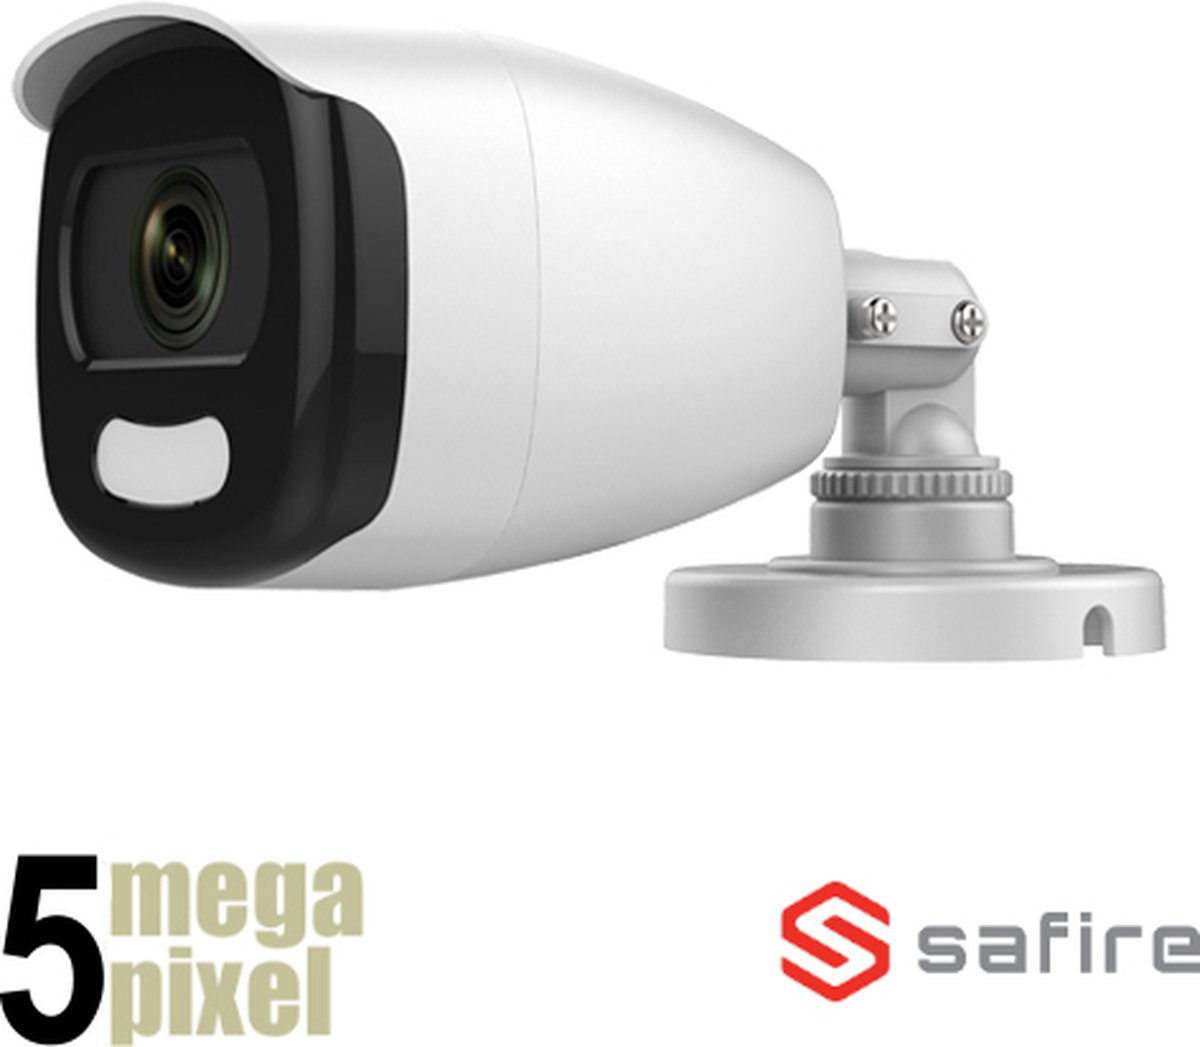 Safire Night Colour Beveiligingscamera - 4in1 Camera - 5 Megapixel - 3.6mm lens - 20 Meter Nachtzicht - Witte LED Verlichting - Binnen & Buiten